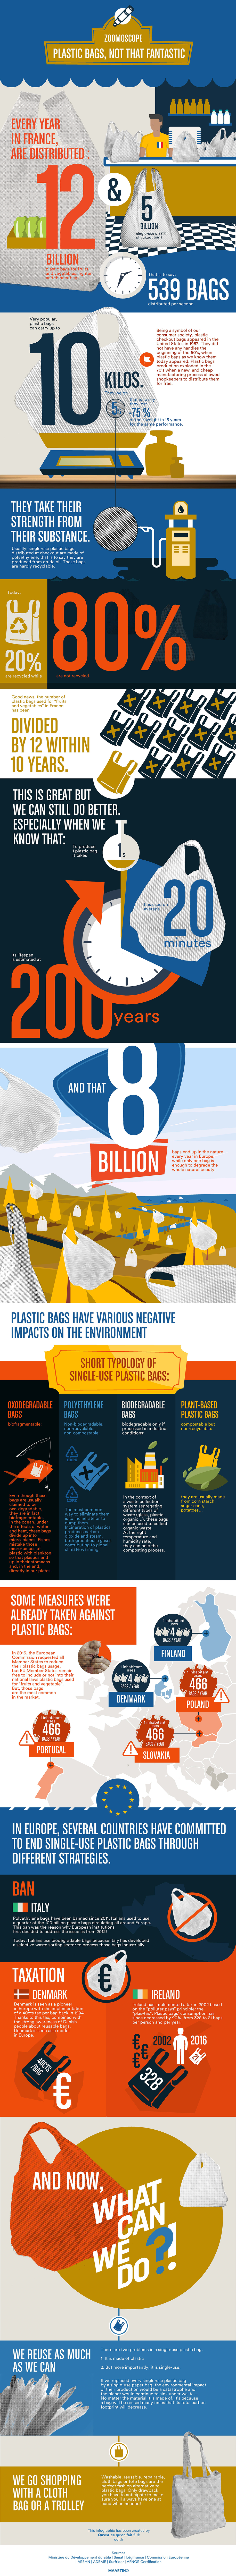 Ocean Campus infographic surfrider qqf qu'est-ce qu'on fait platic bags not that fantastic maartin